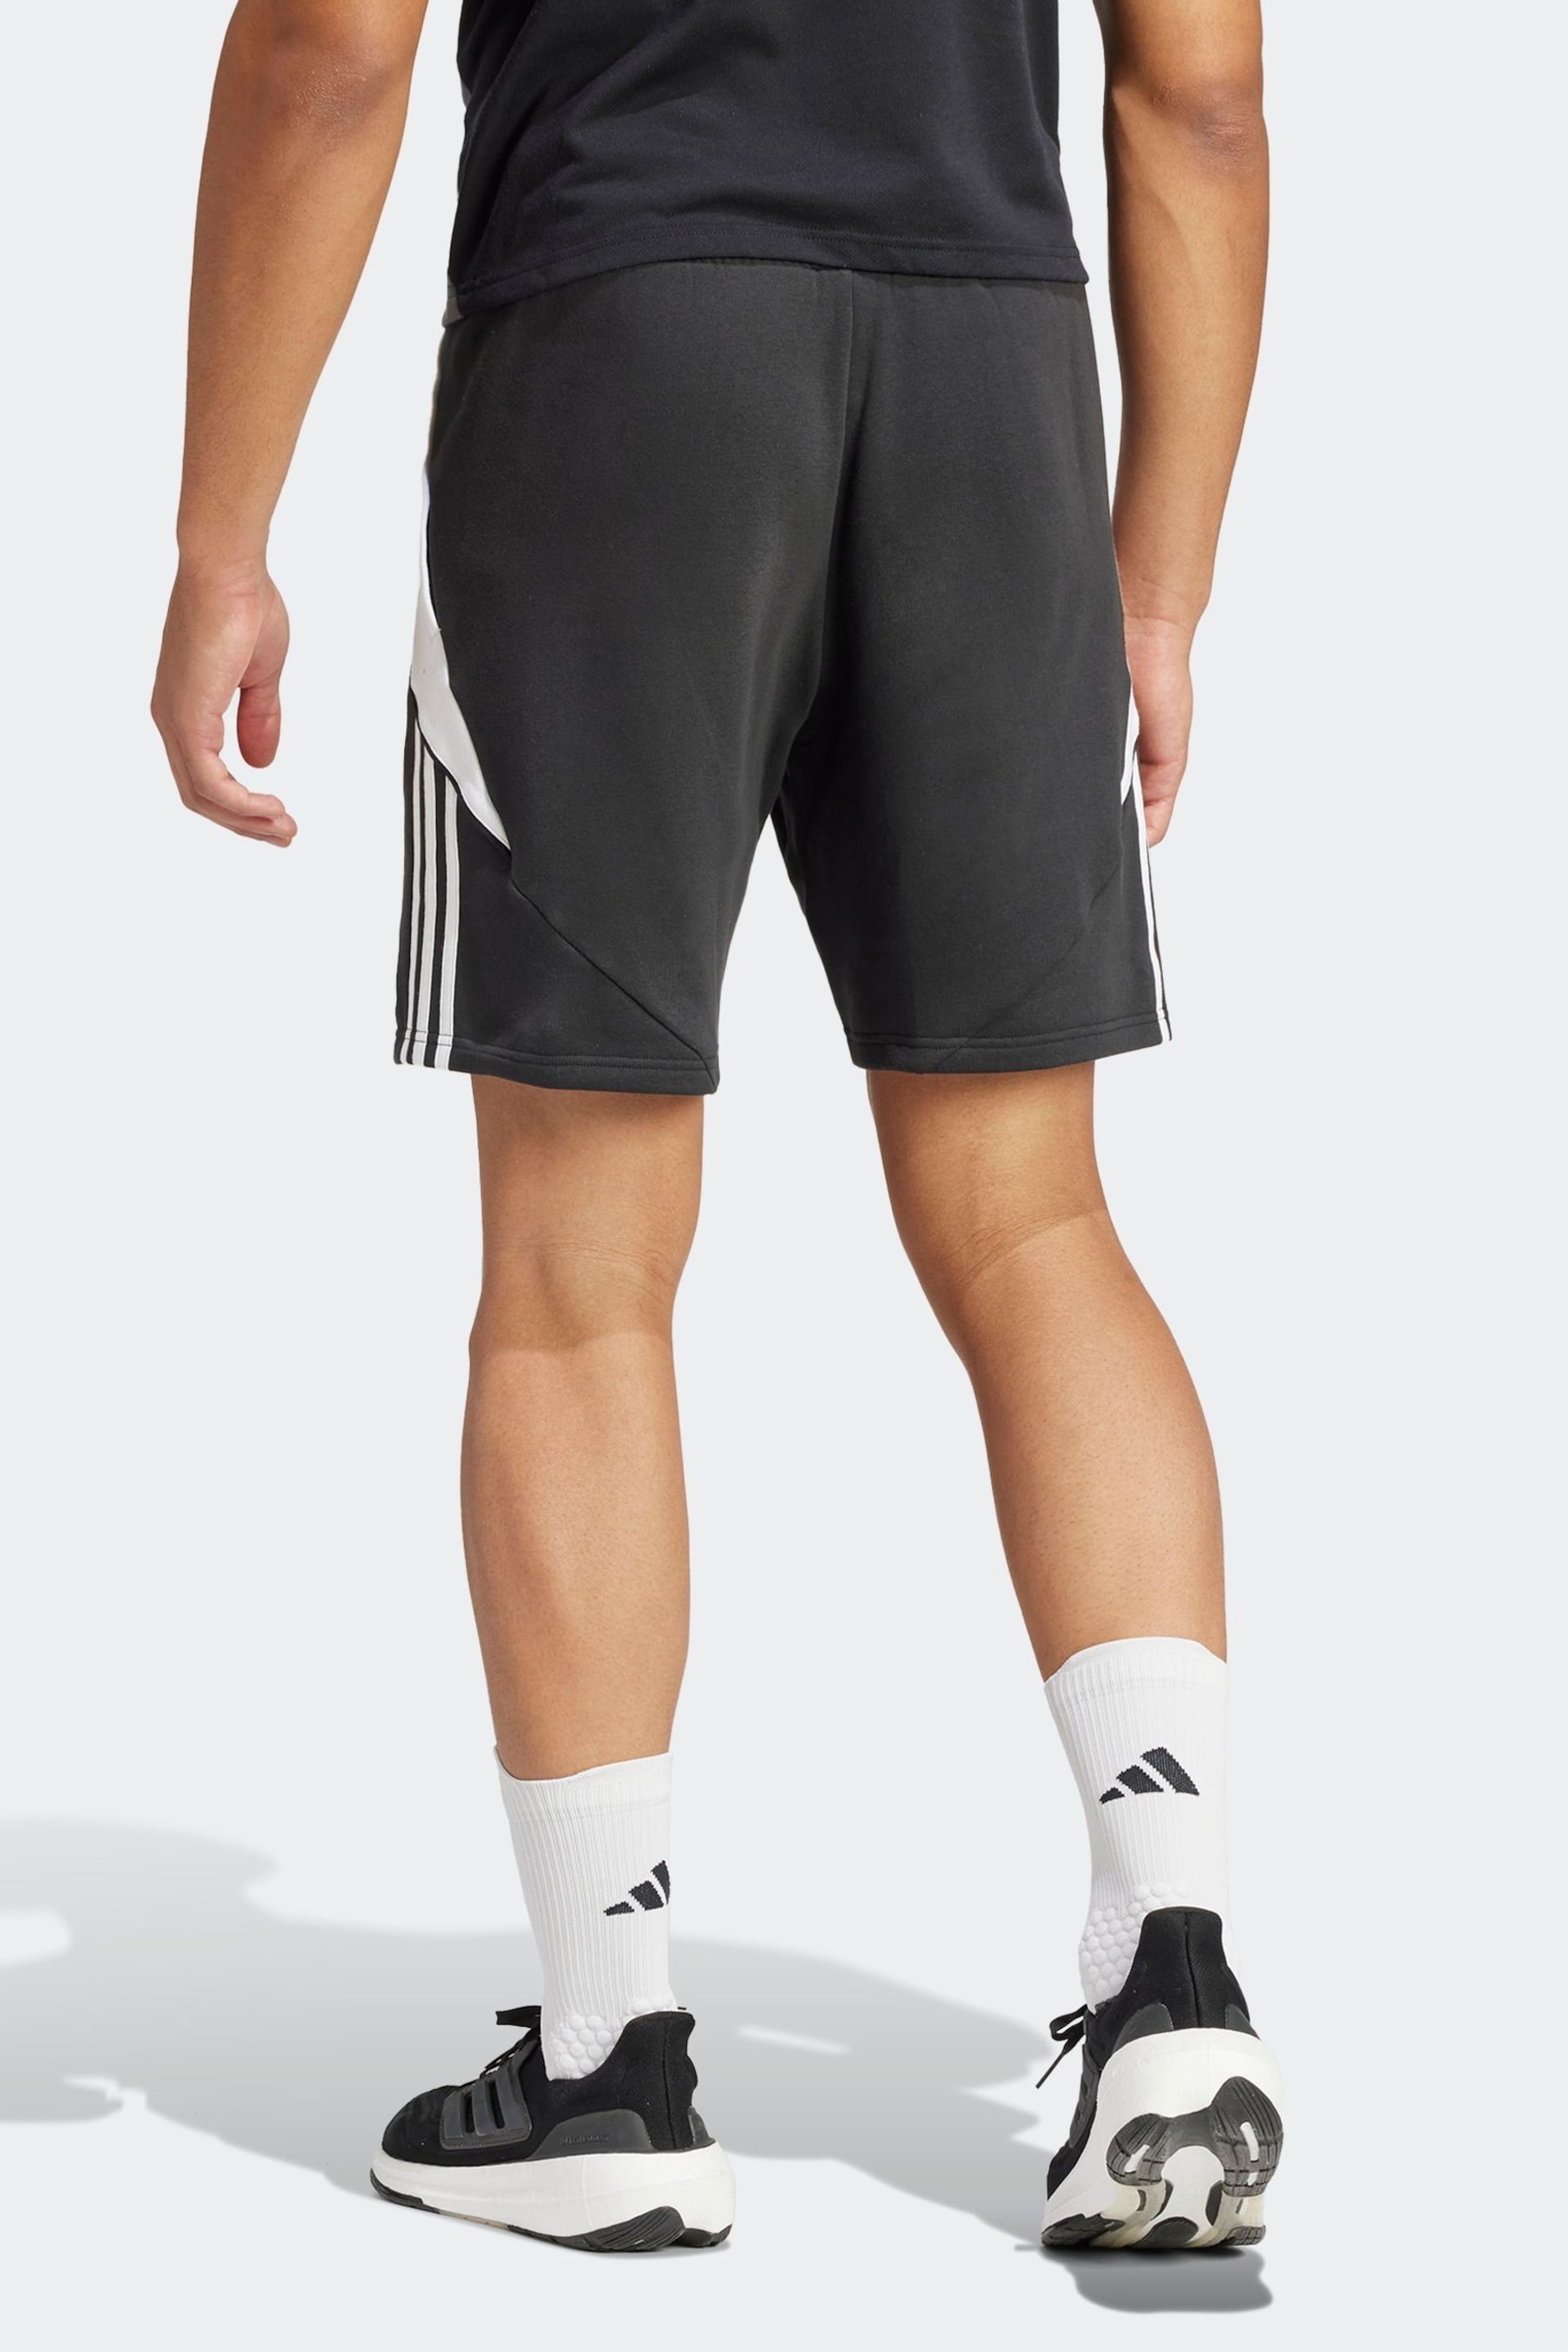 adidas Black Tiro 24 Sweat Shorts - Image 2 of 5